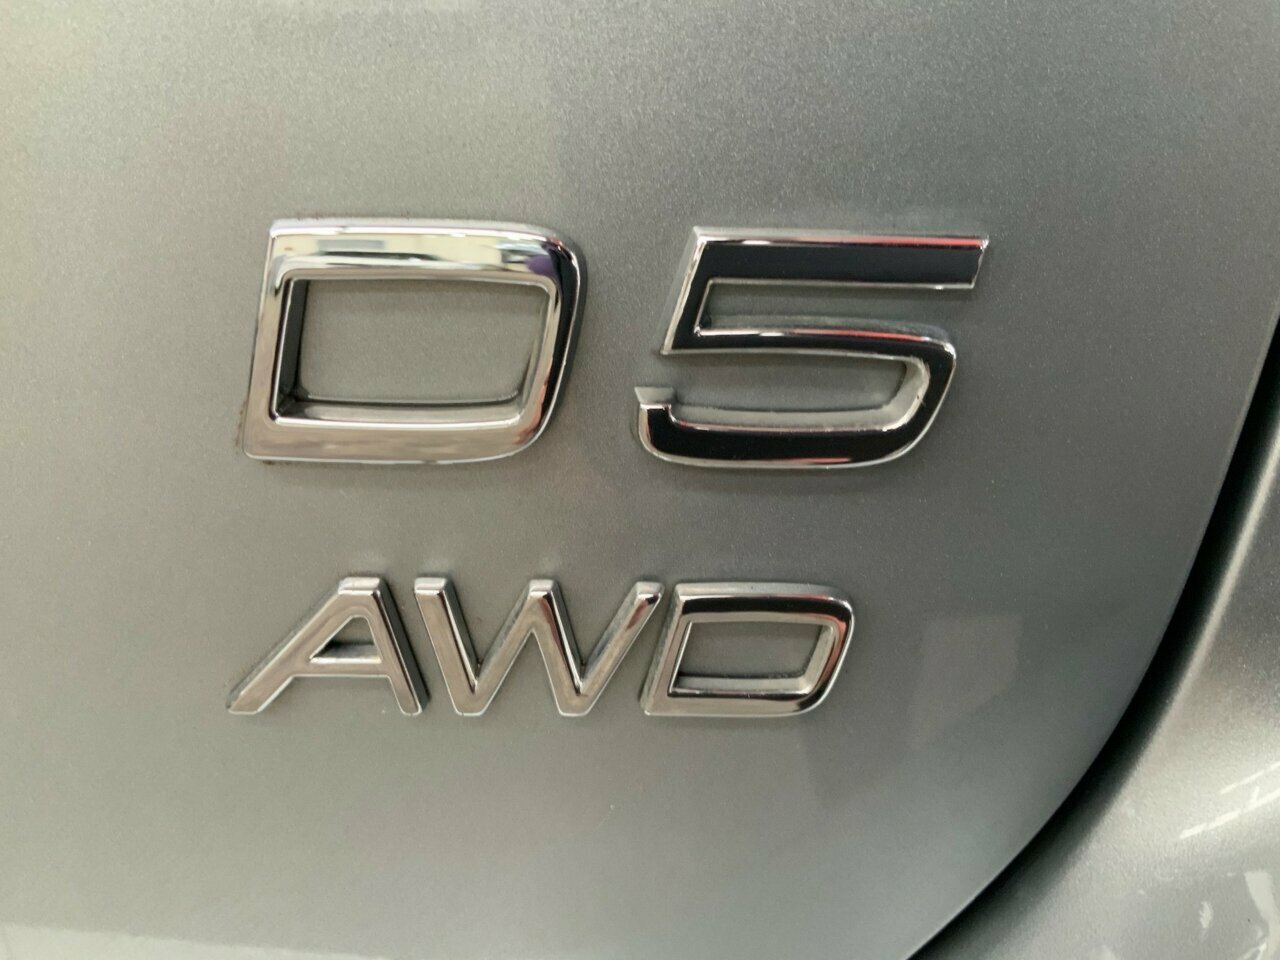 2015 Volvo XC60 DZ MY15 D5 Geartronic AWD Luxury SUV Image 20